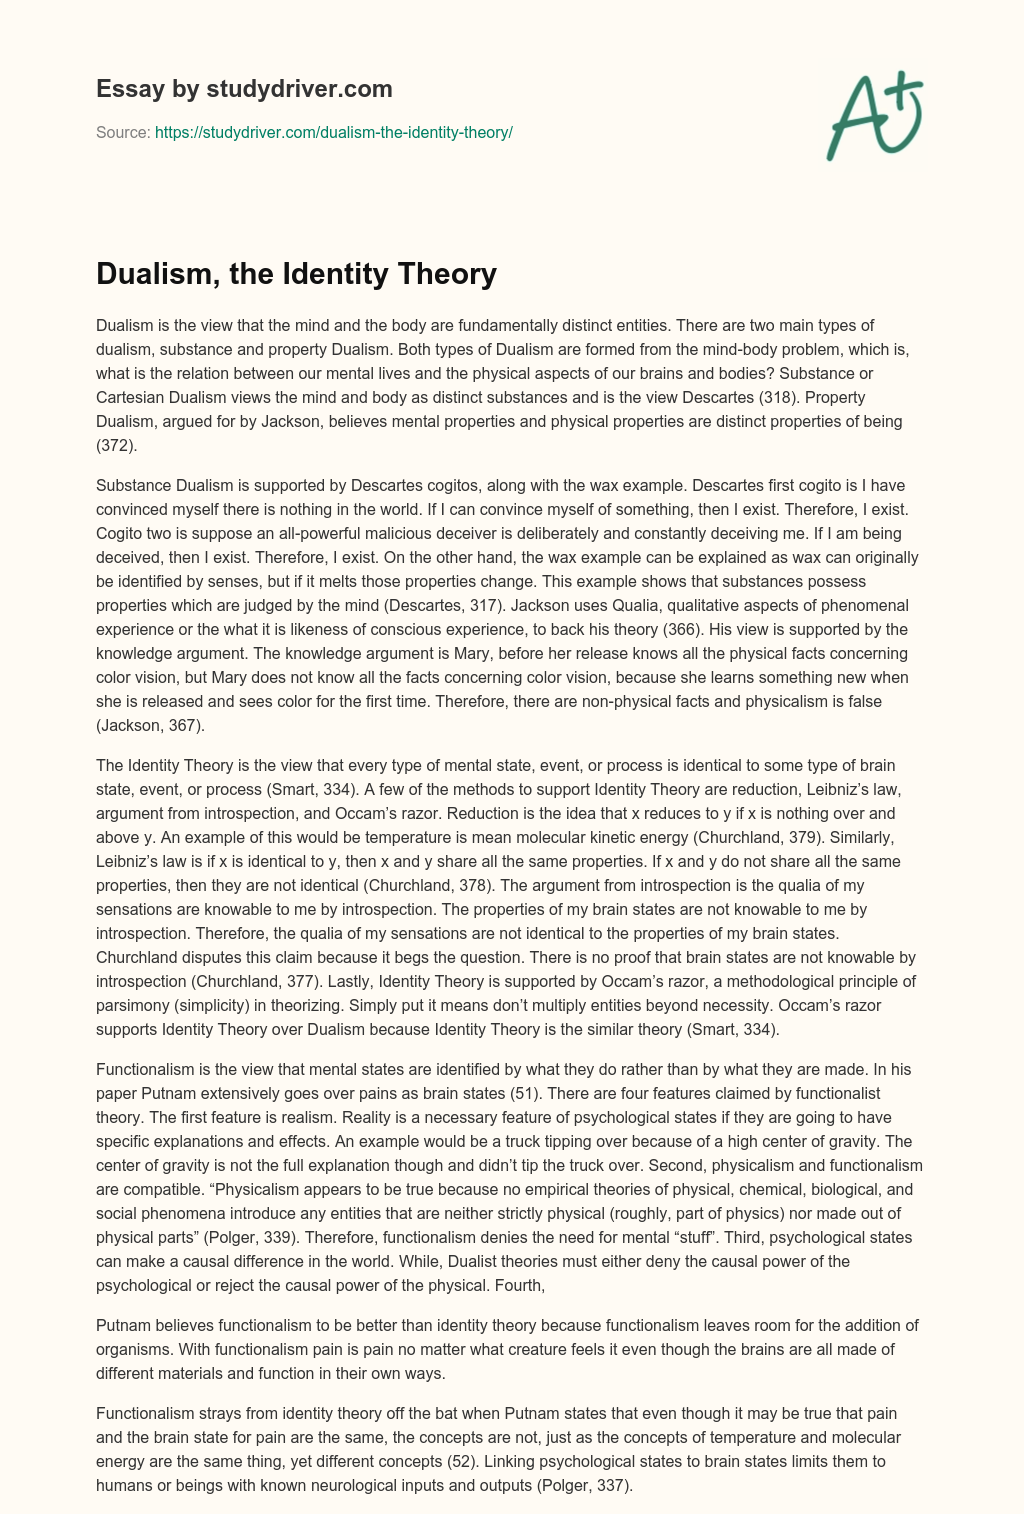 Dualism, the Identity Theory essay